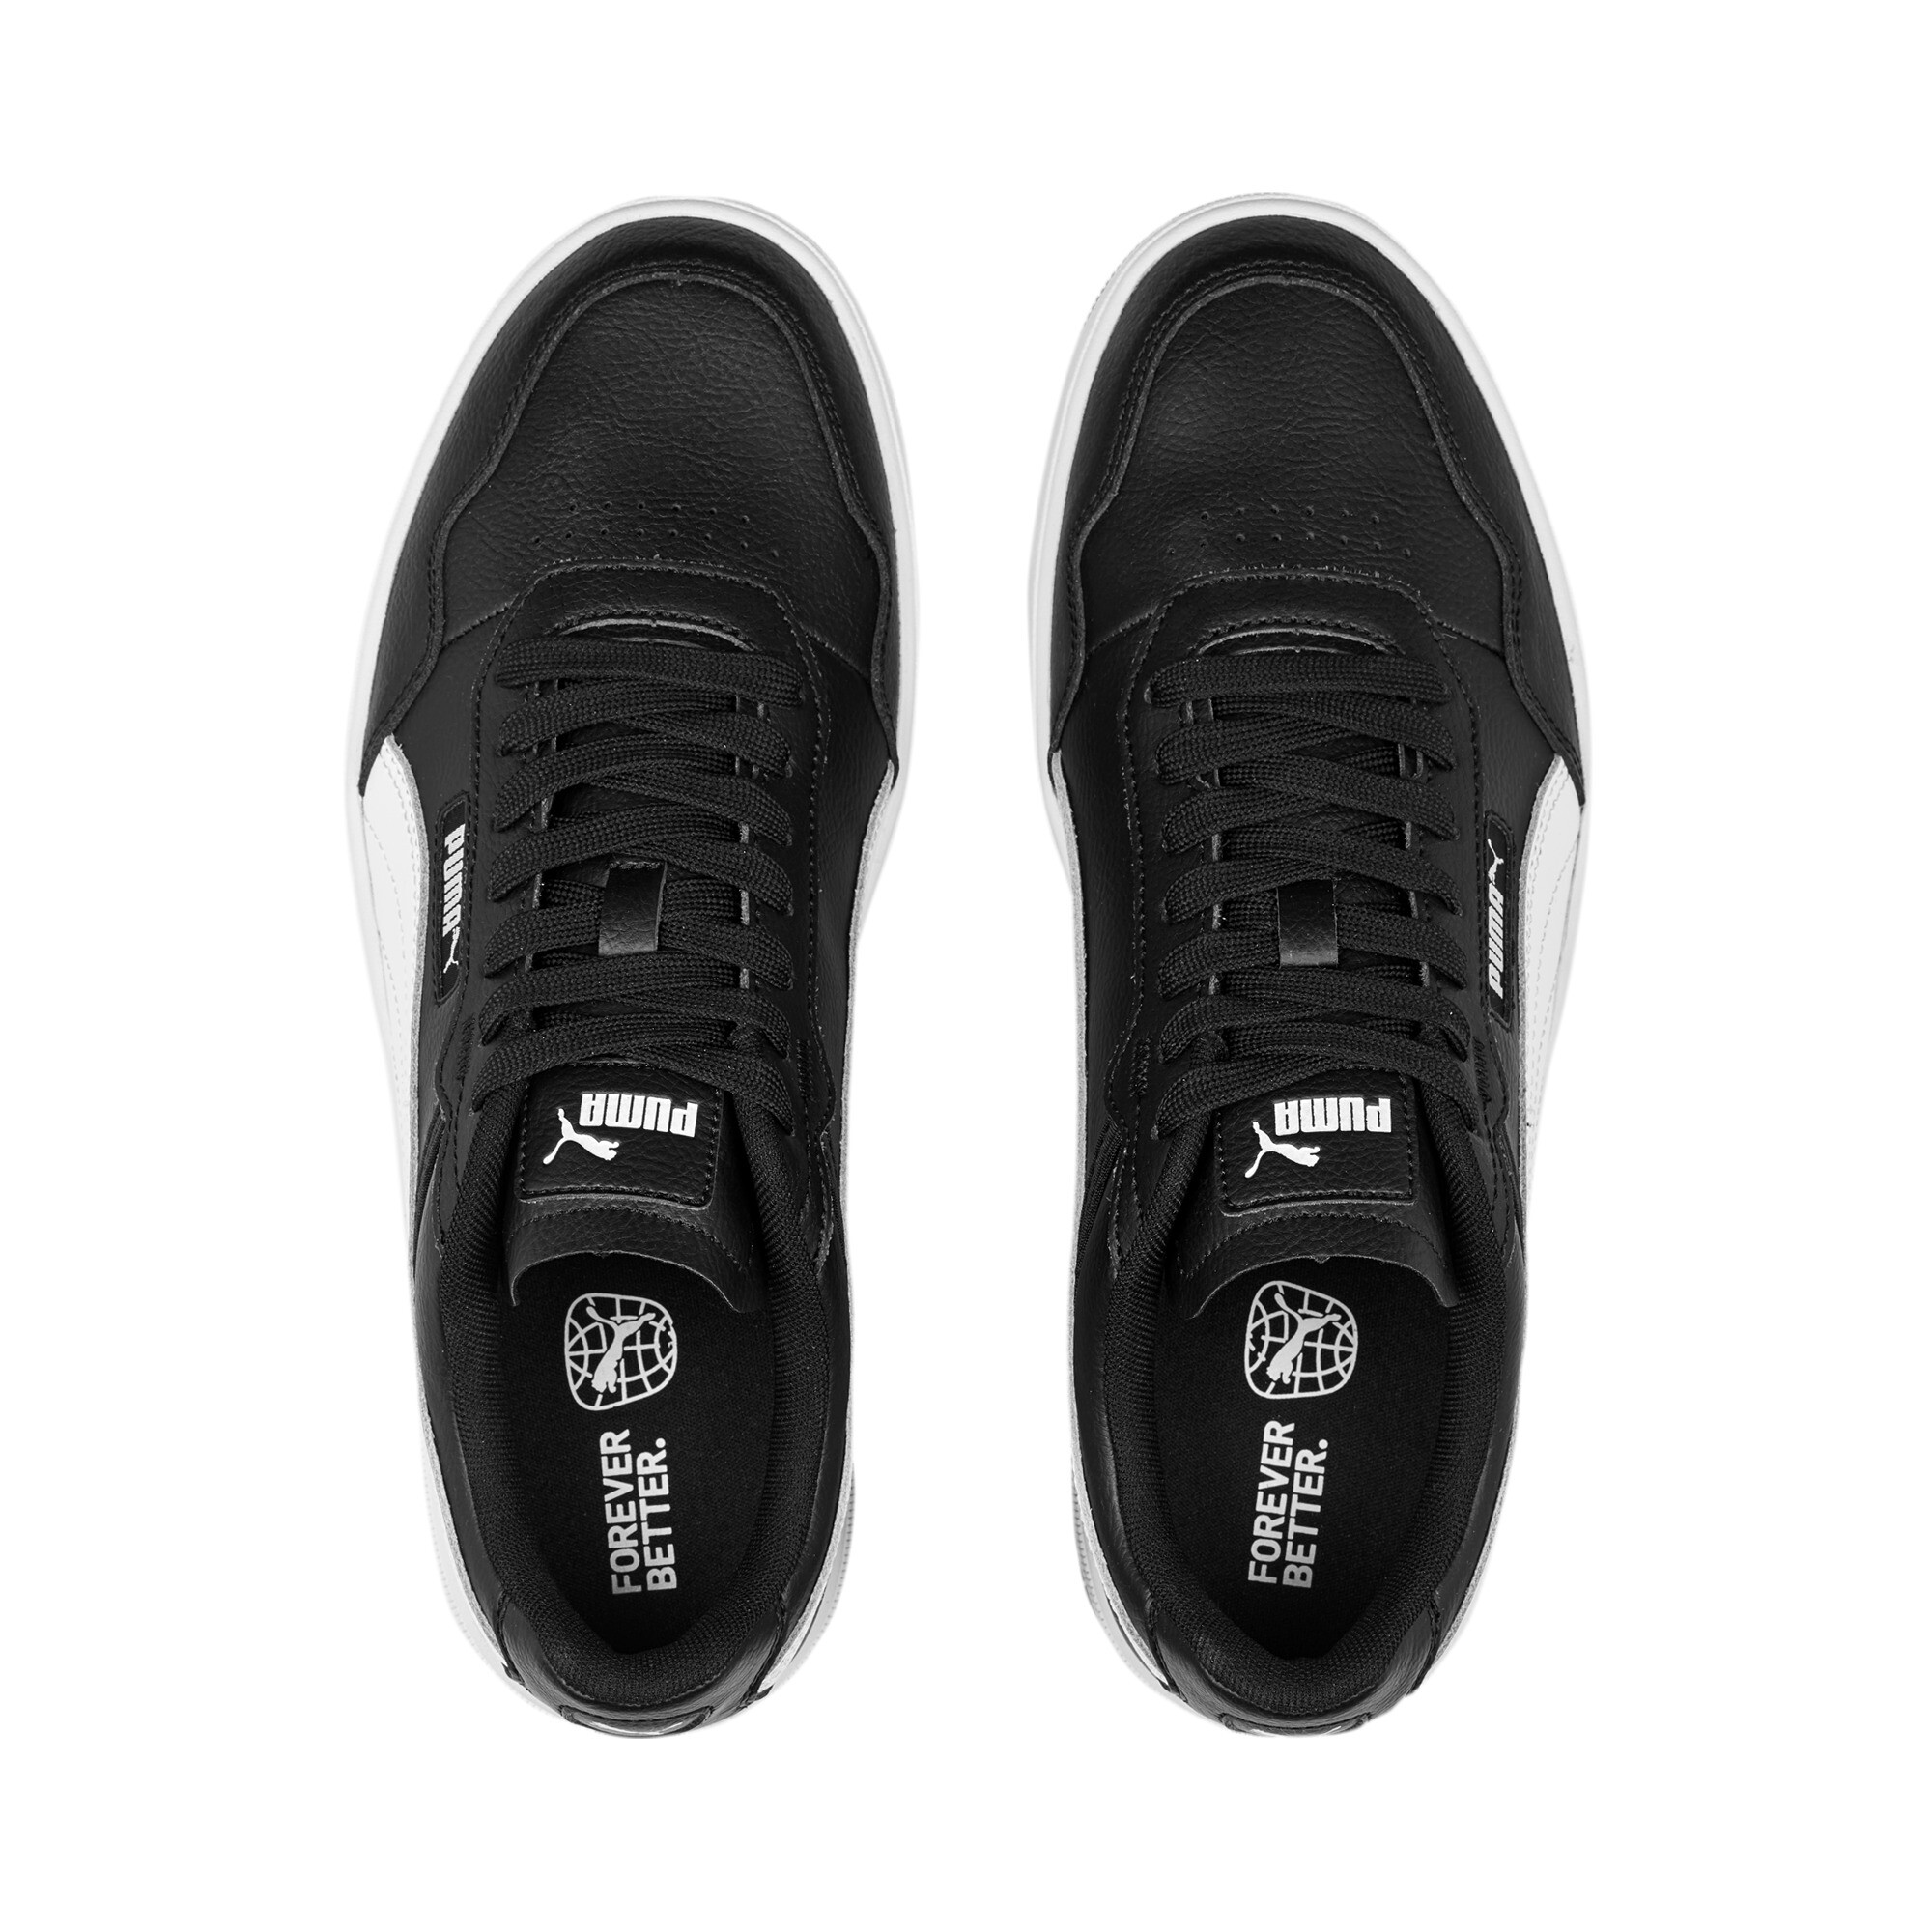 PUMA Men's Court Ultra Sneakers | eBay